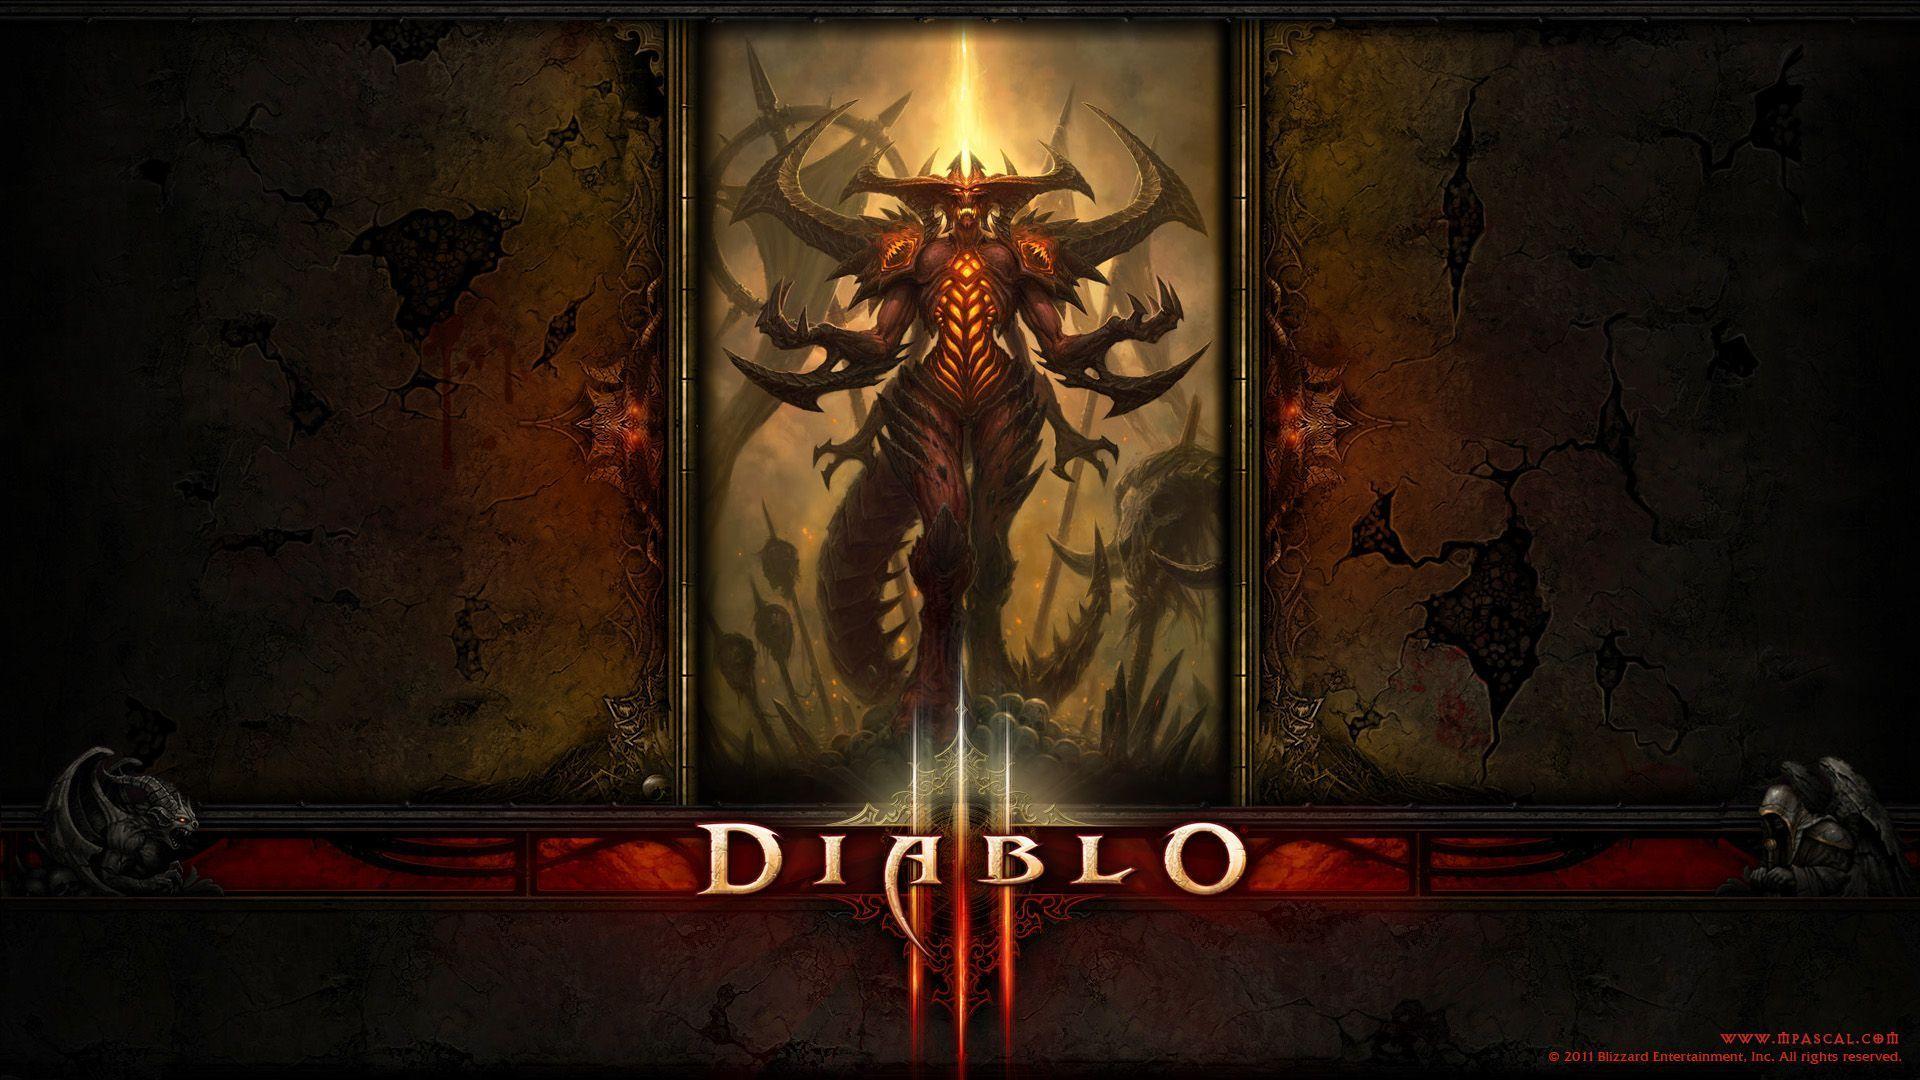 Diablo III Wallpaper. Diablo III Background